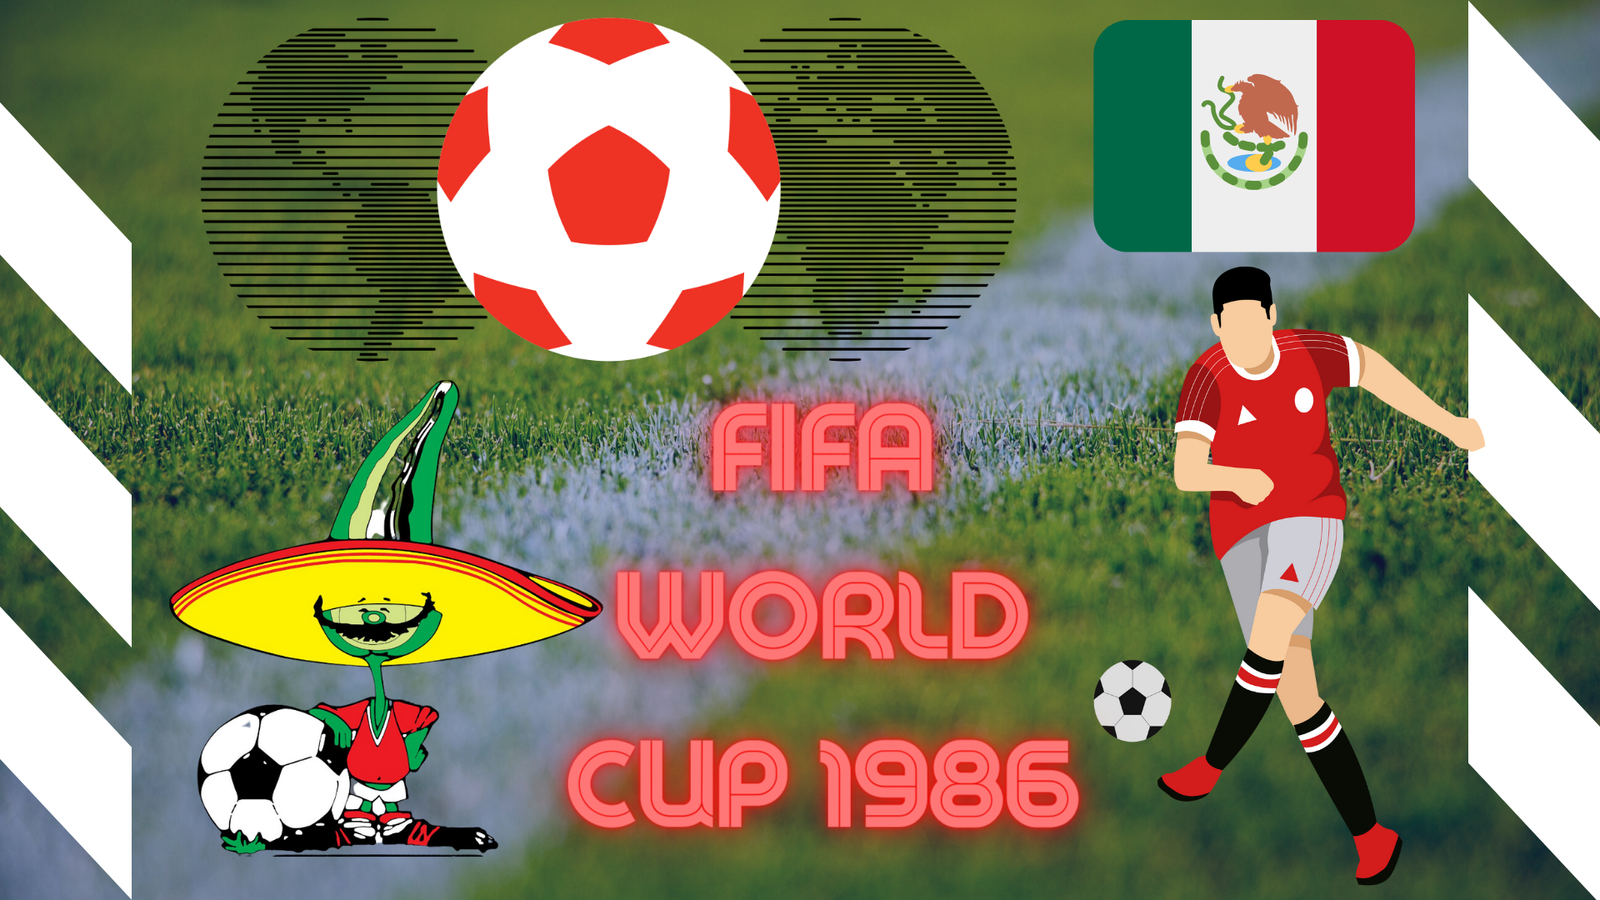 FIFA World Cup 1986